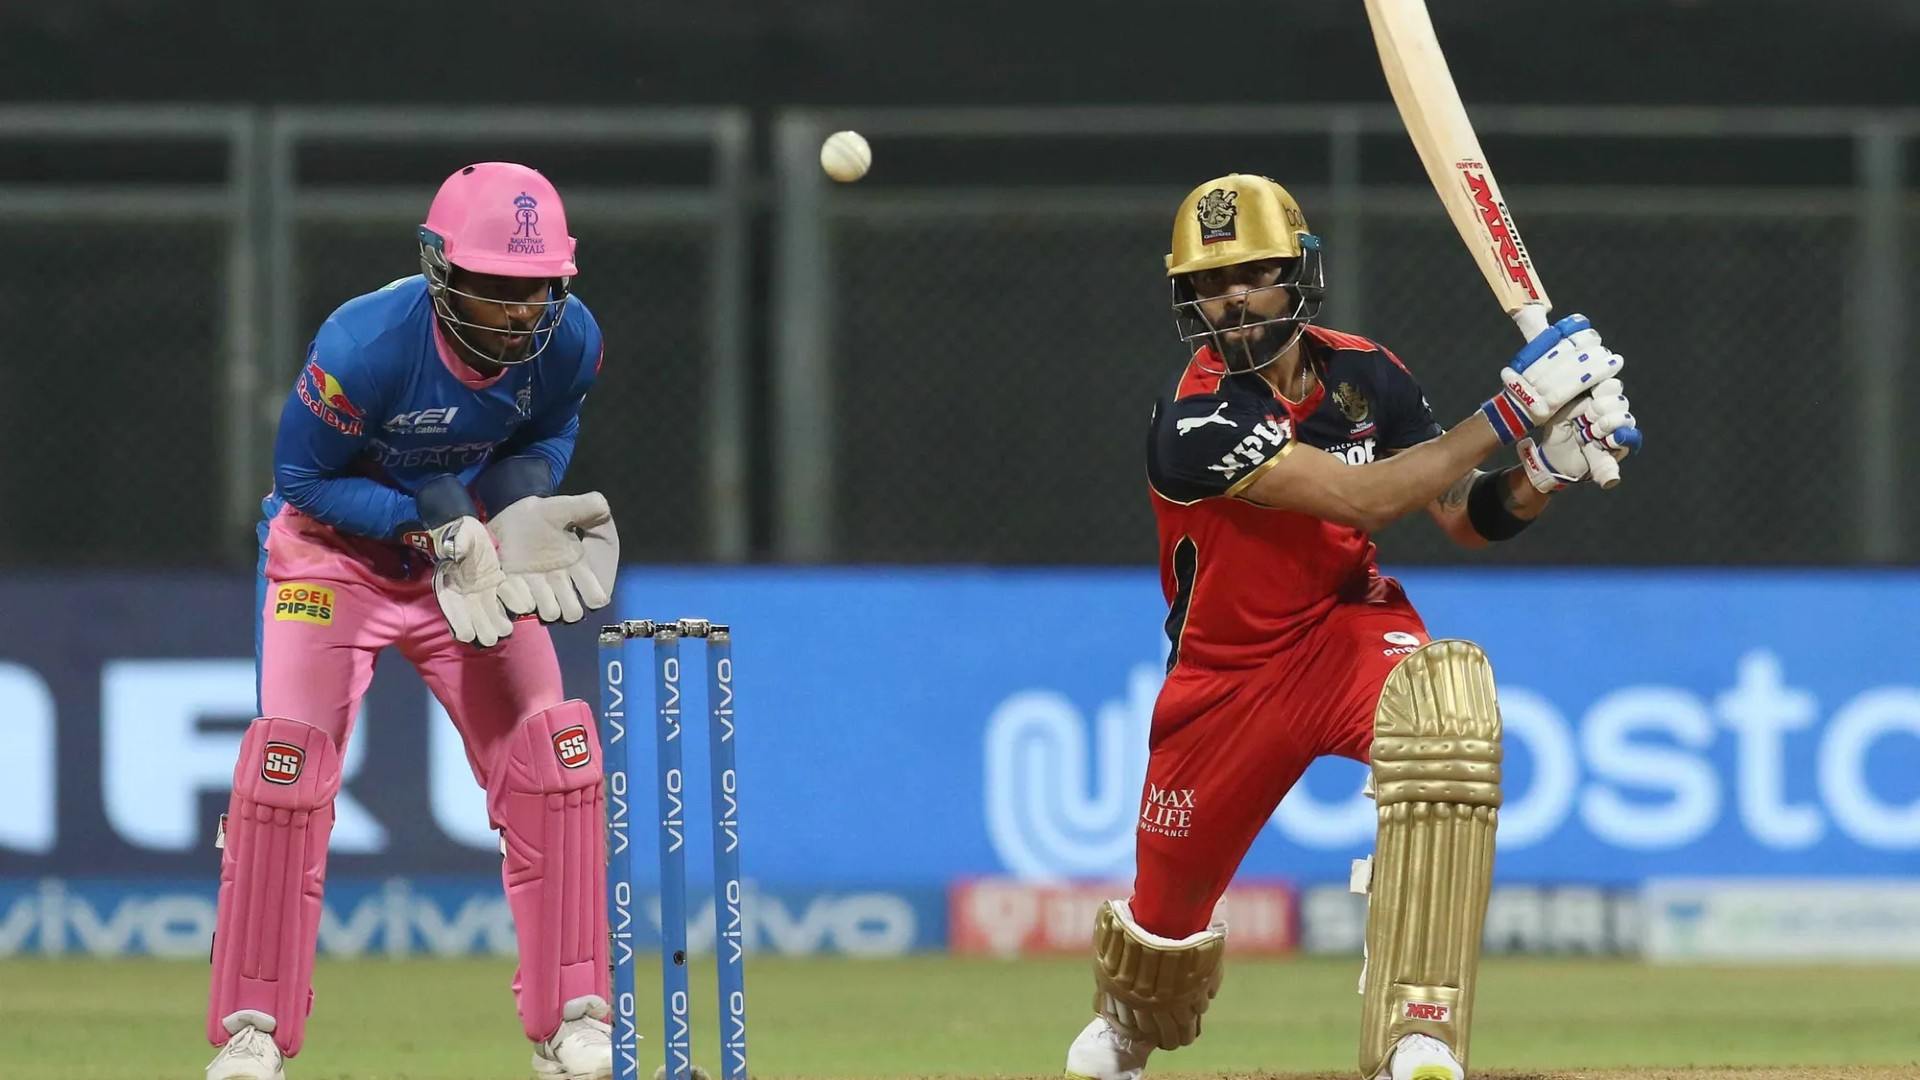 Virat Kohli plays a shot. (Image: BCCI/IPL)